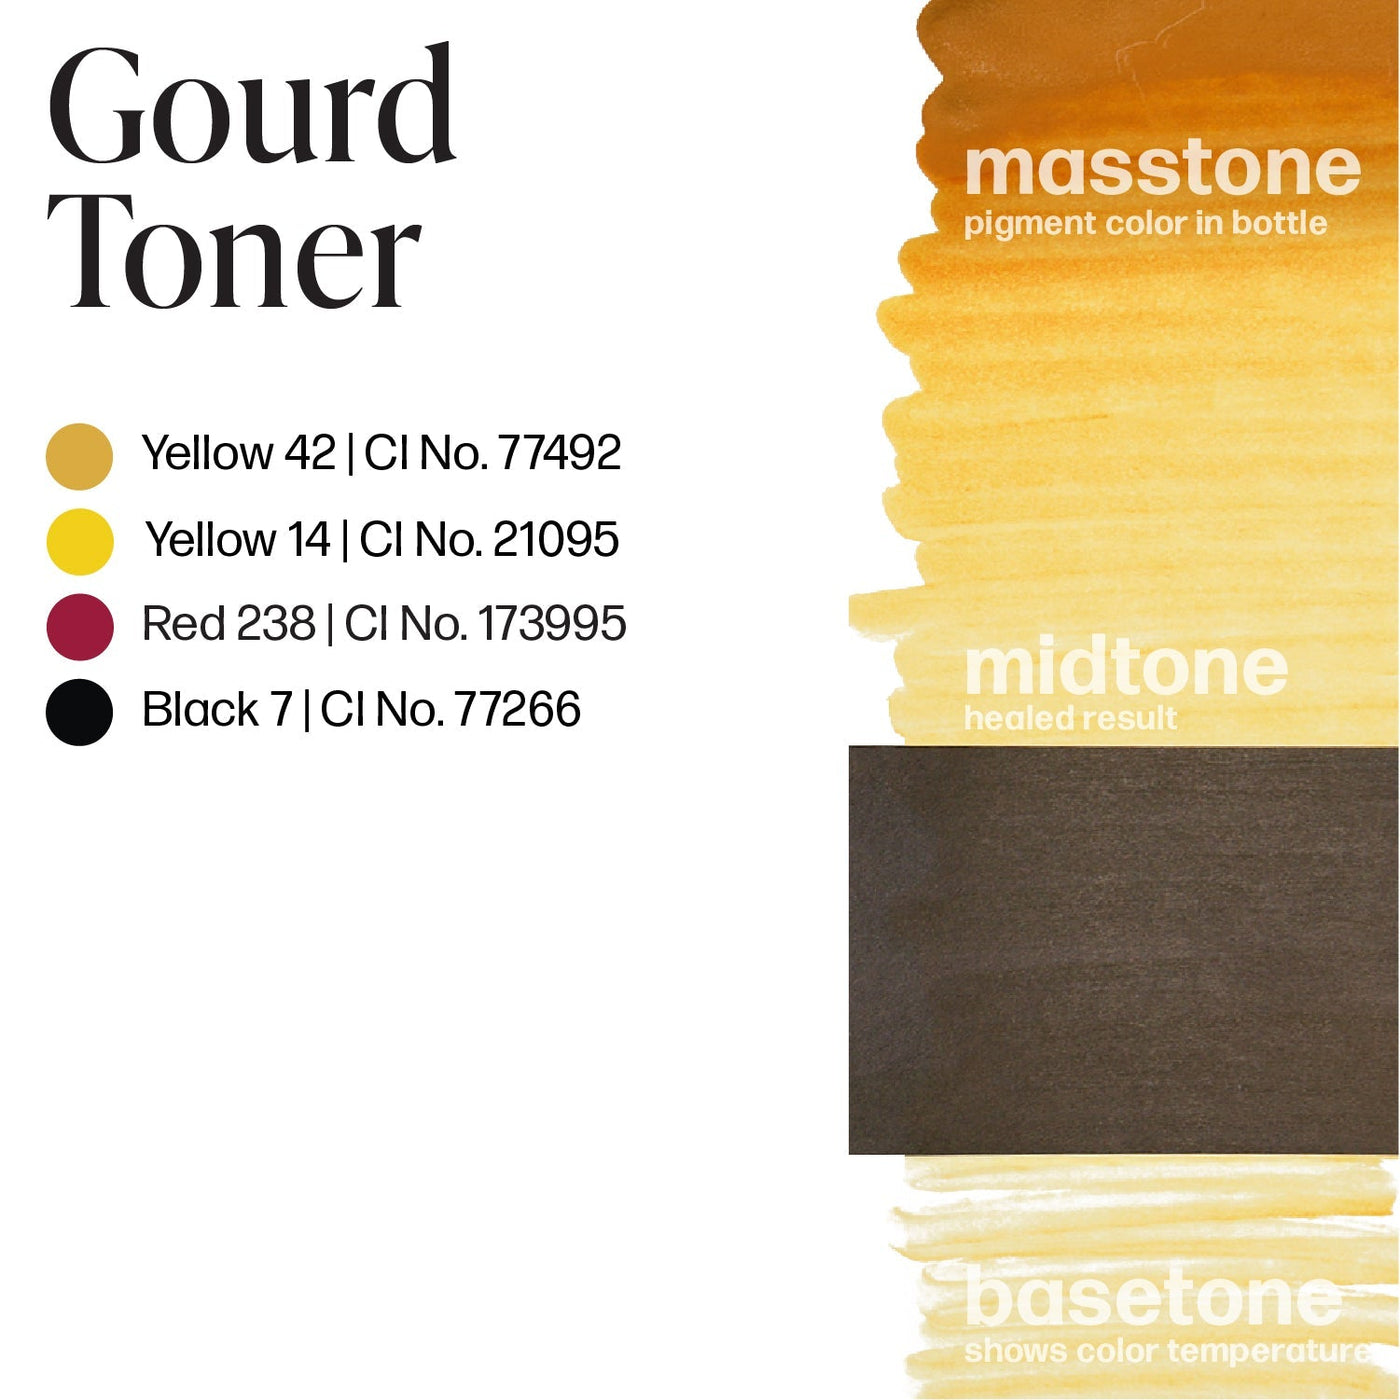 Perma Blend Gourd Toner - PMU Pigments - Mithra Tattoo Supplies Canada